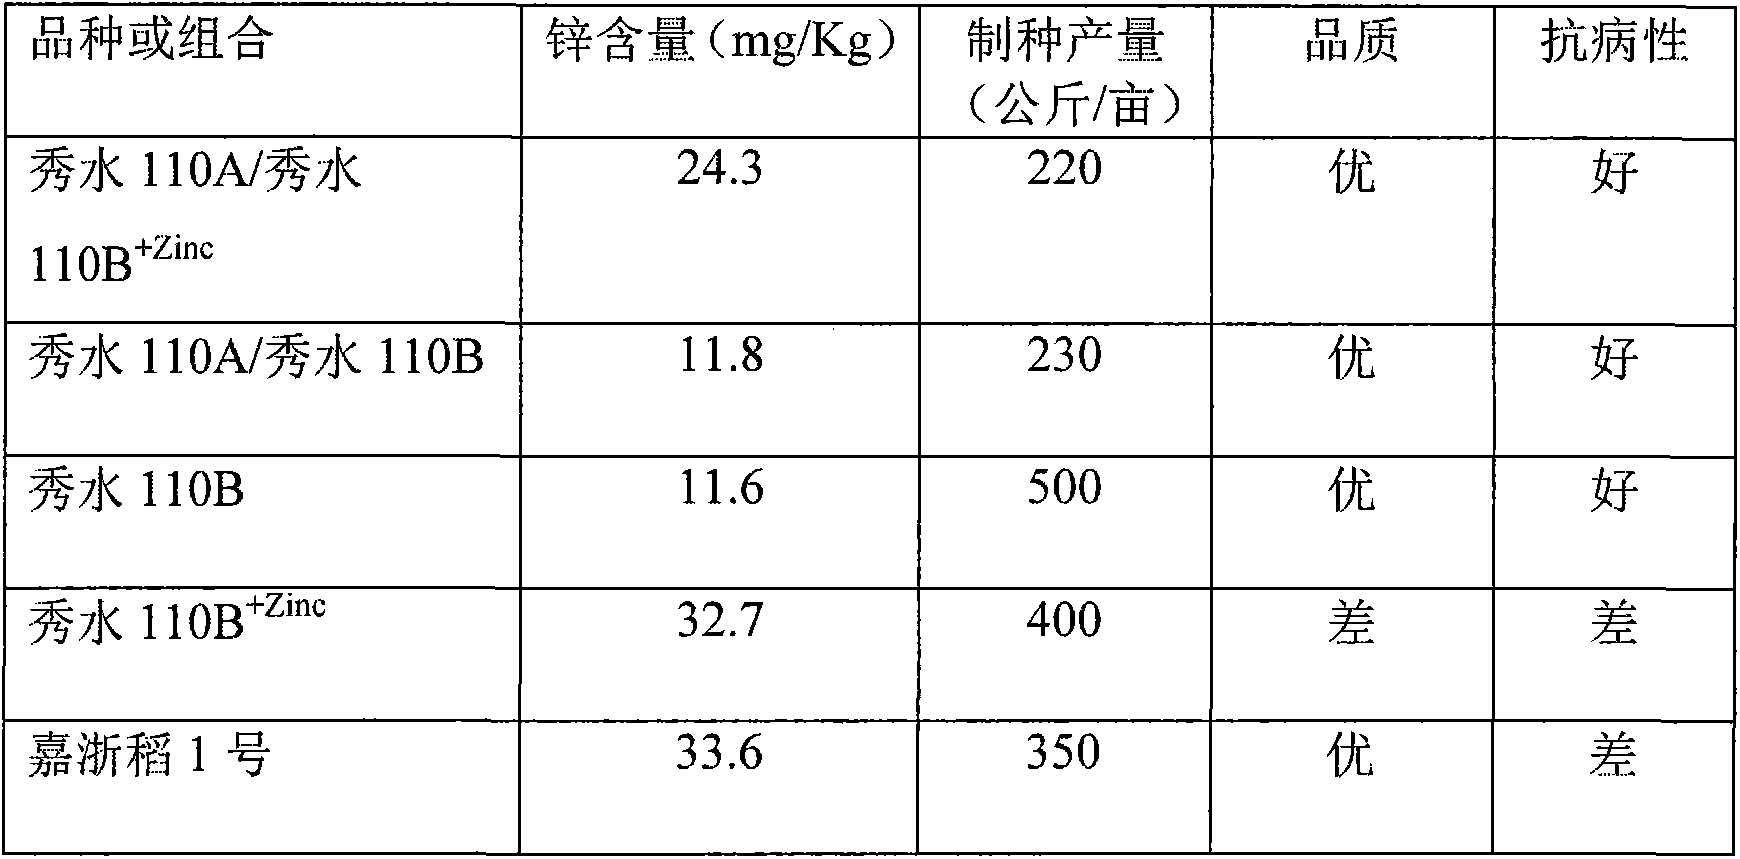 Method for breeding sterile line of high-zinc rice